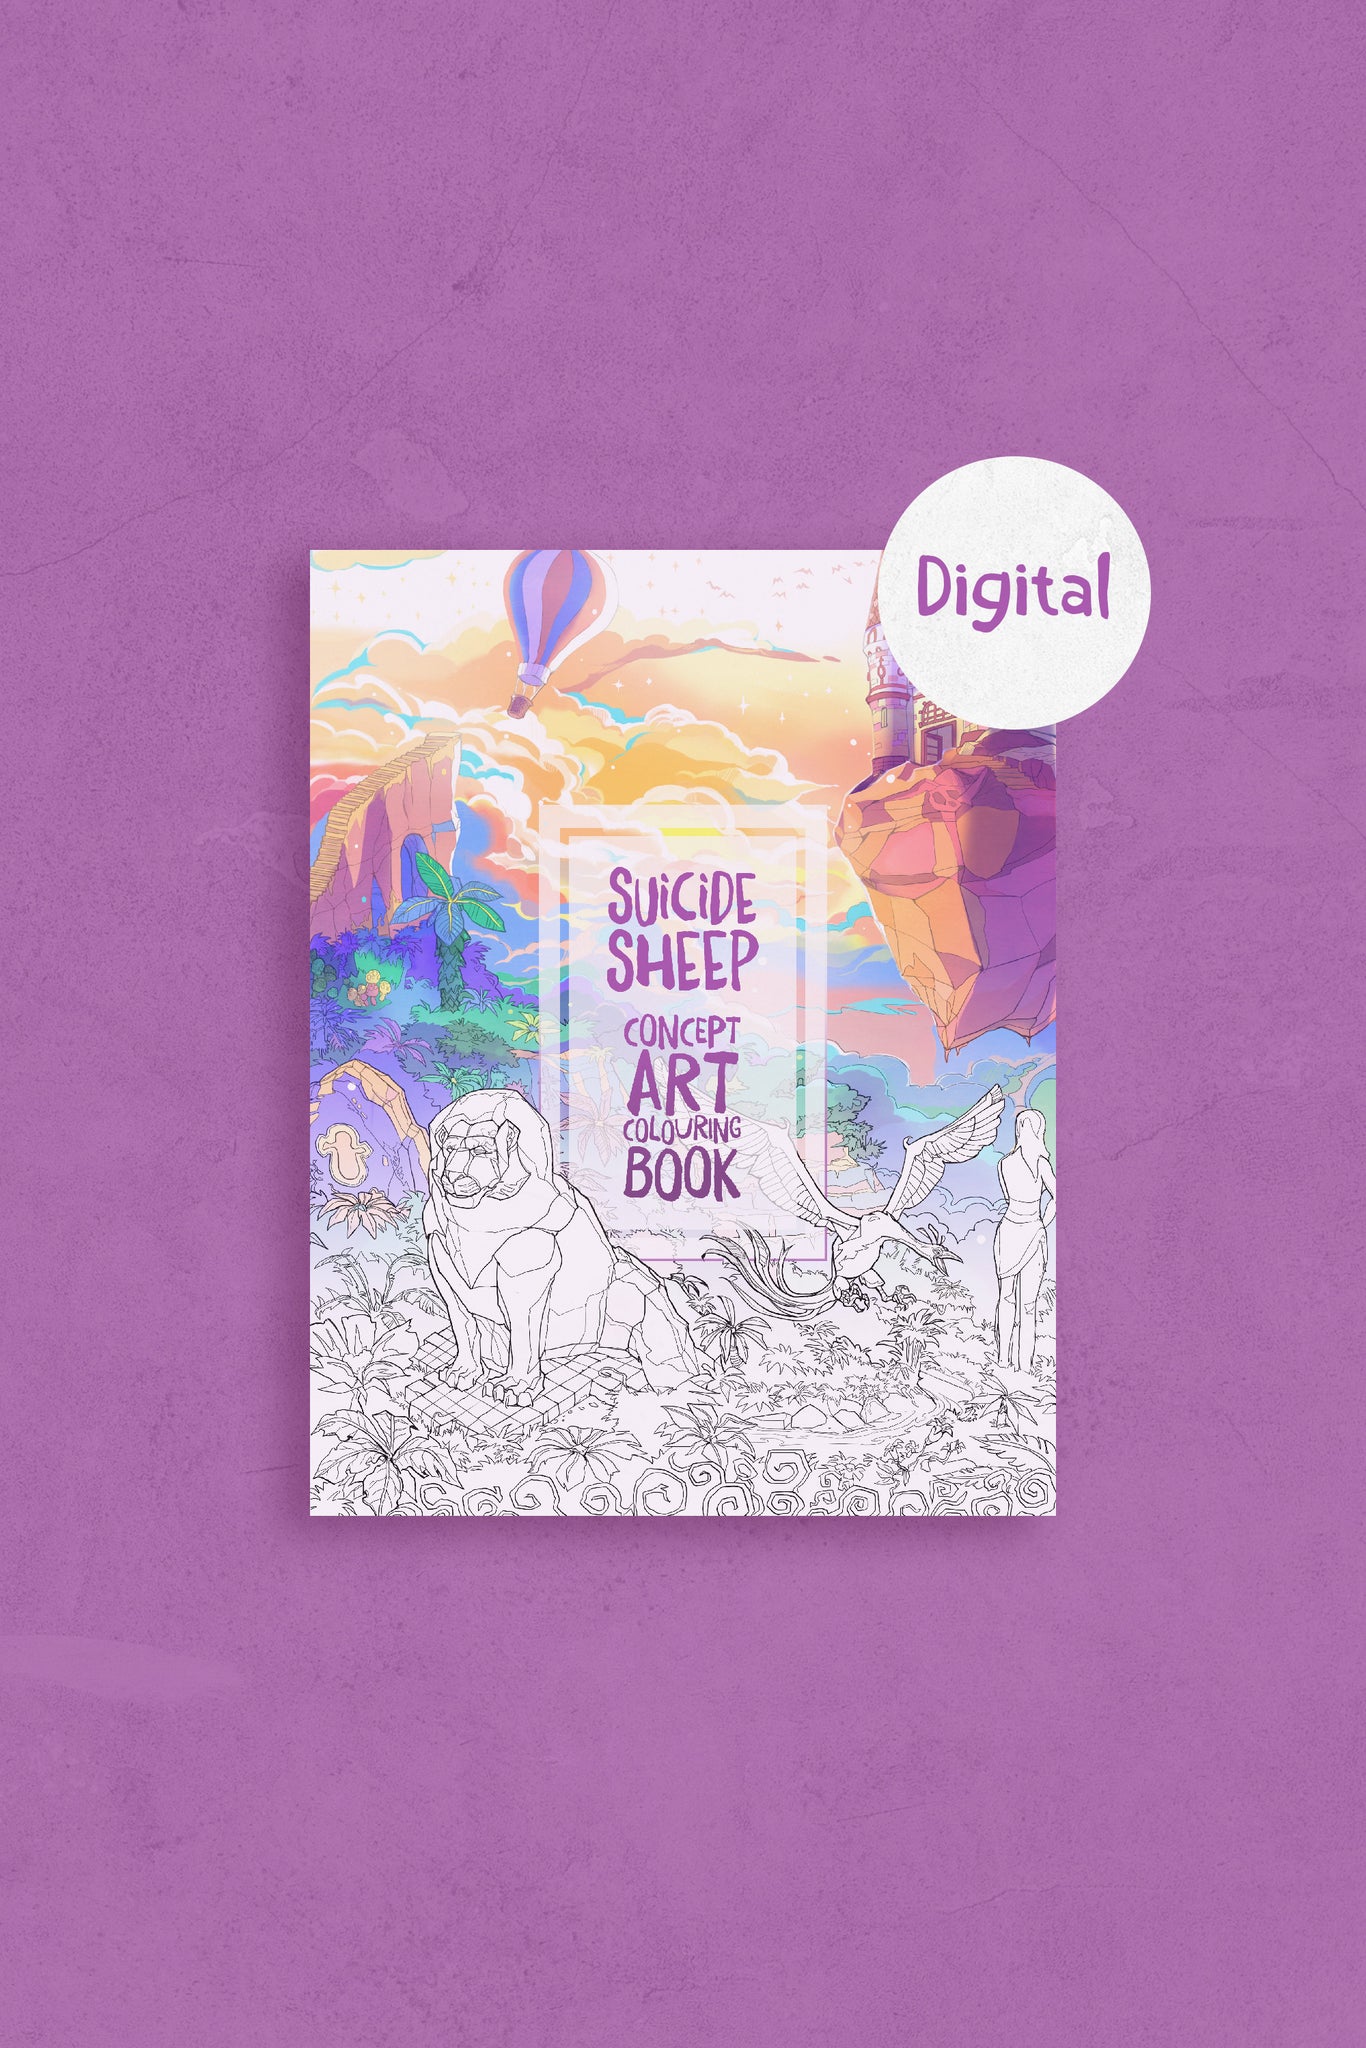 Sheepy's Concept Art Colouring Book: Digital Edition